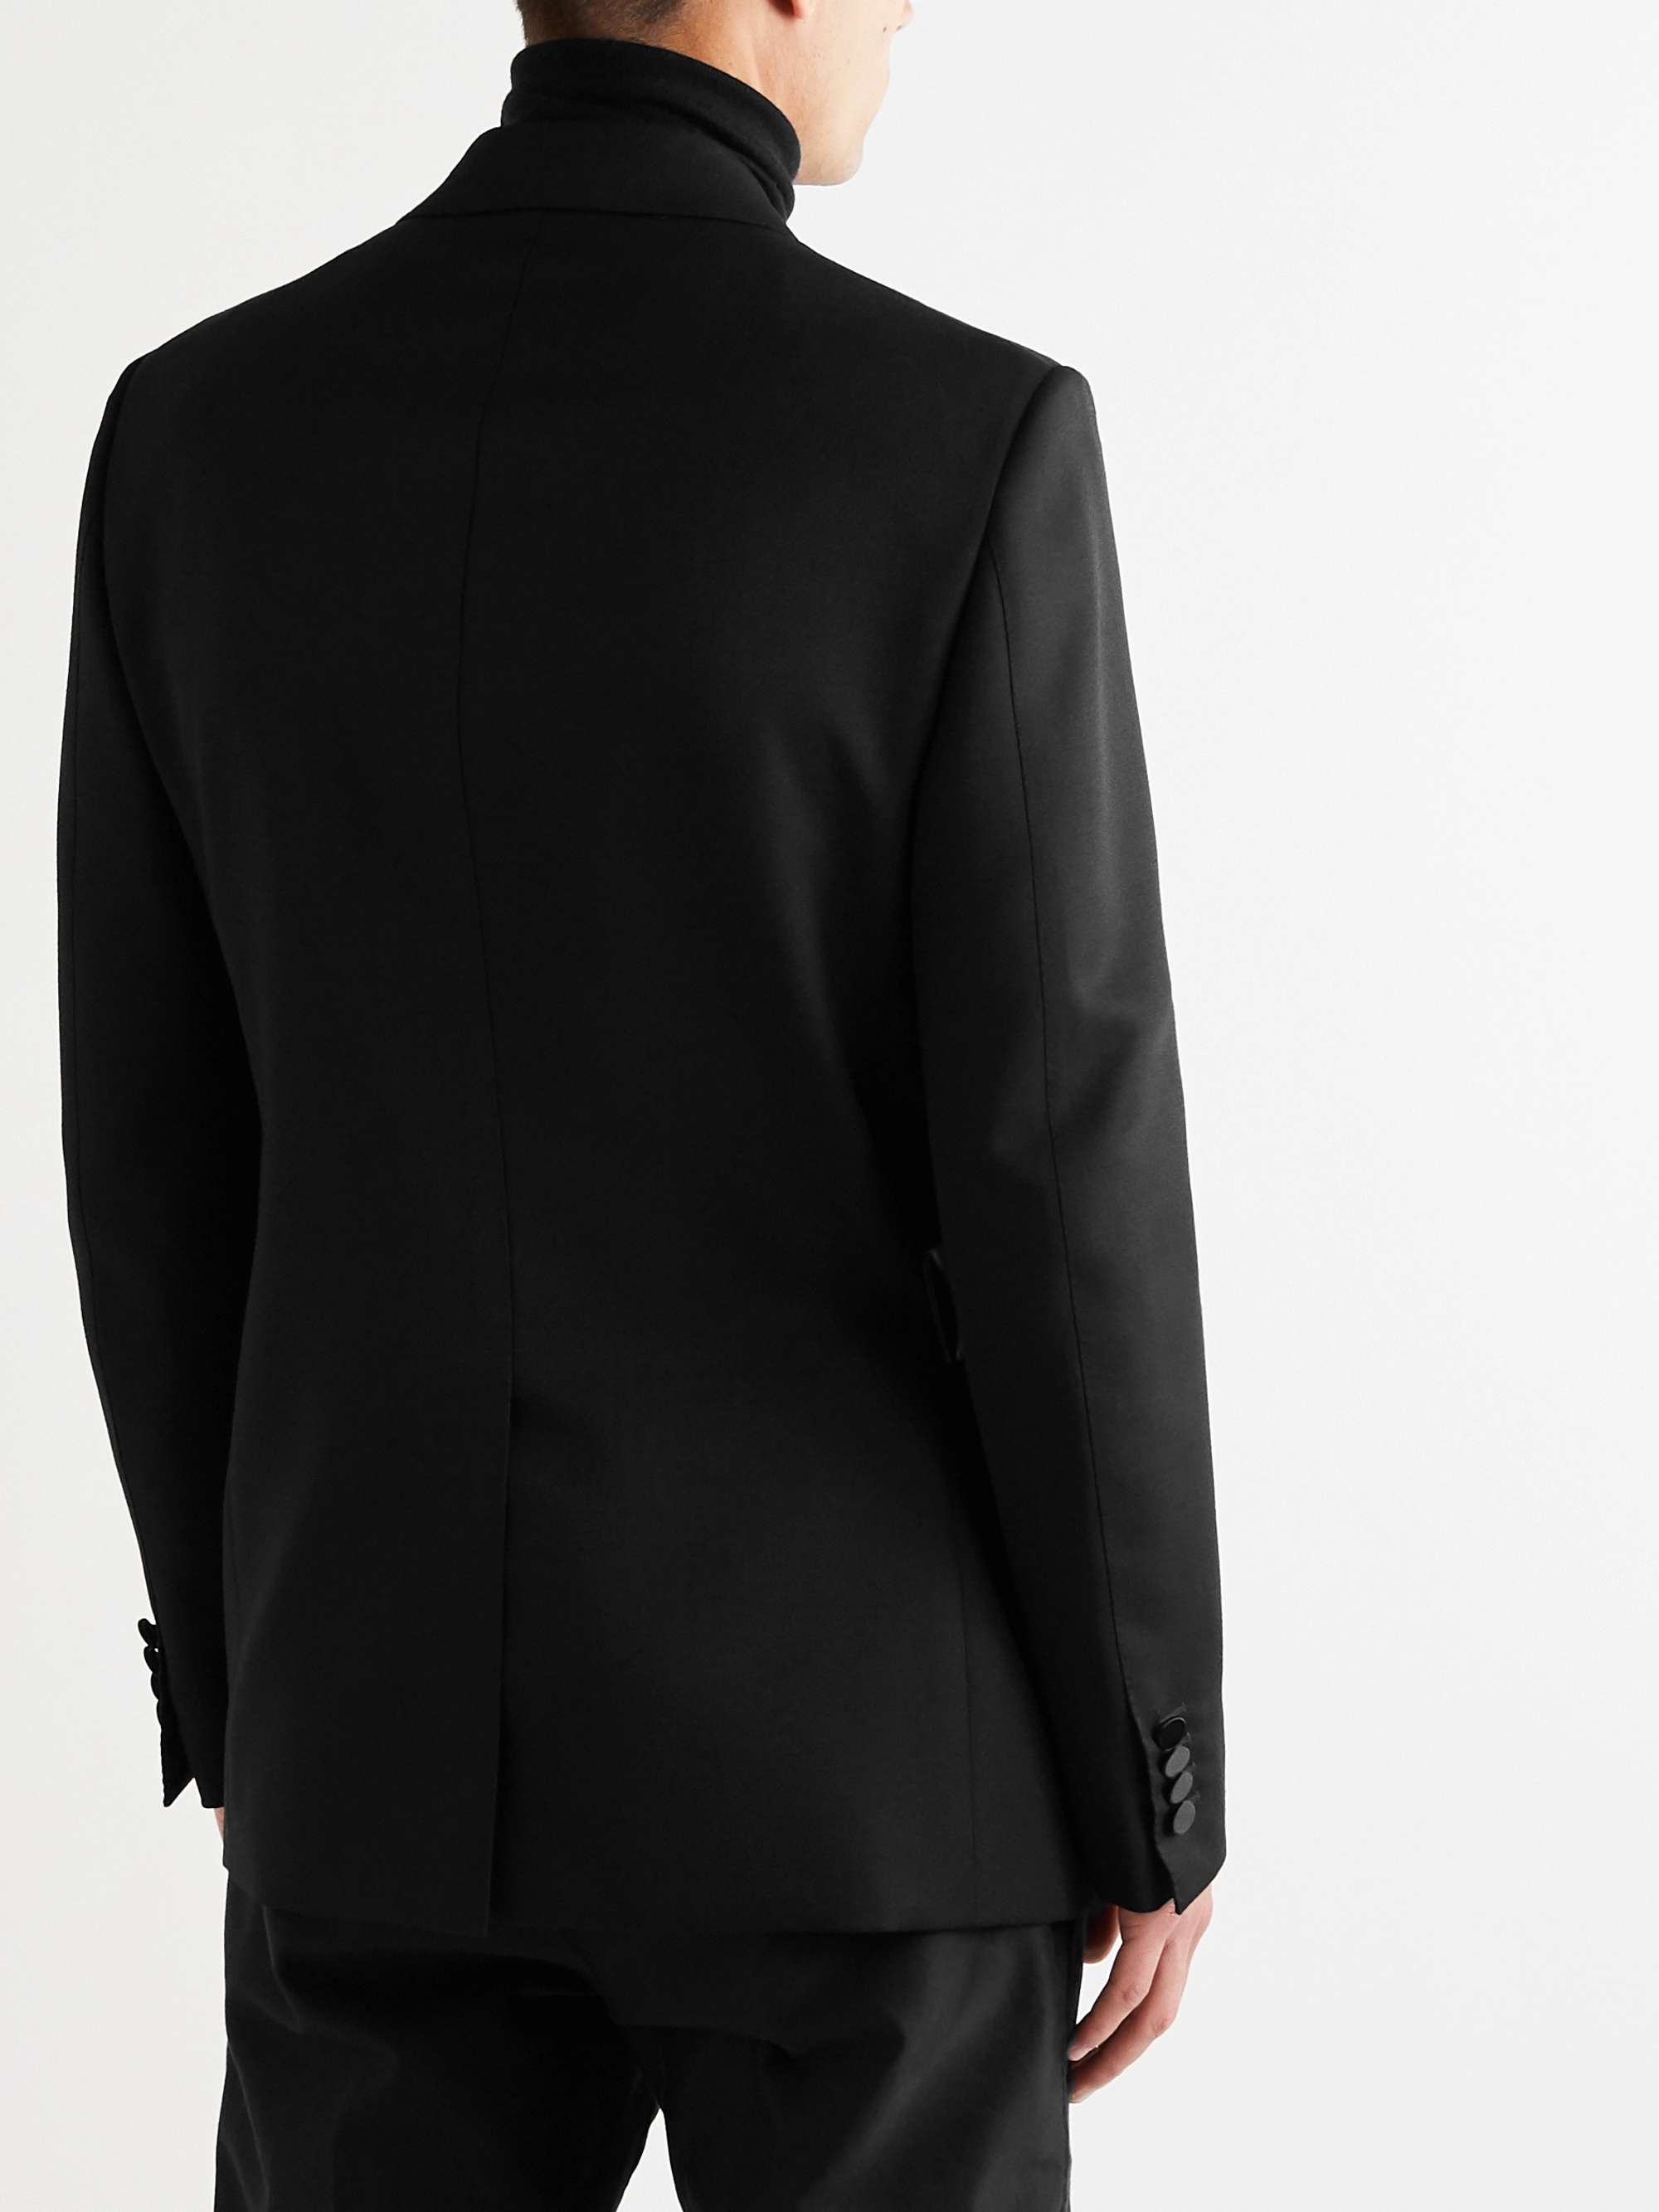 DUNHILL Satin-Trimmed Wool Tuxedo Jacket